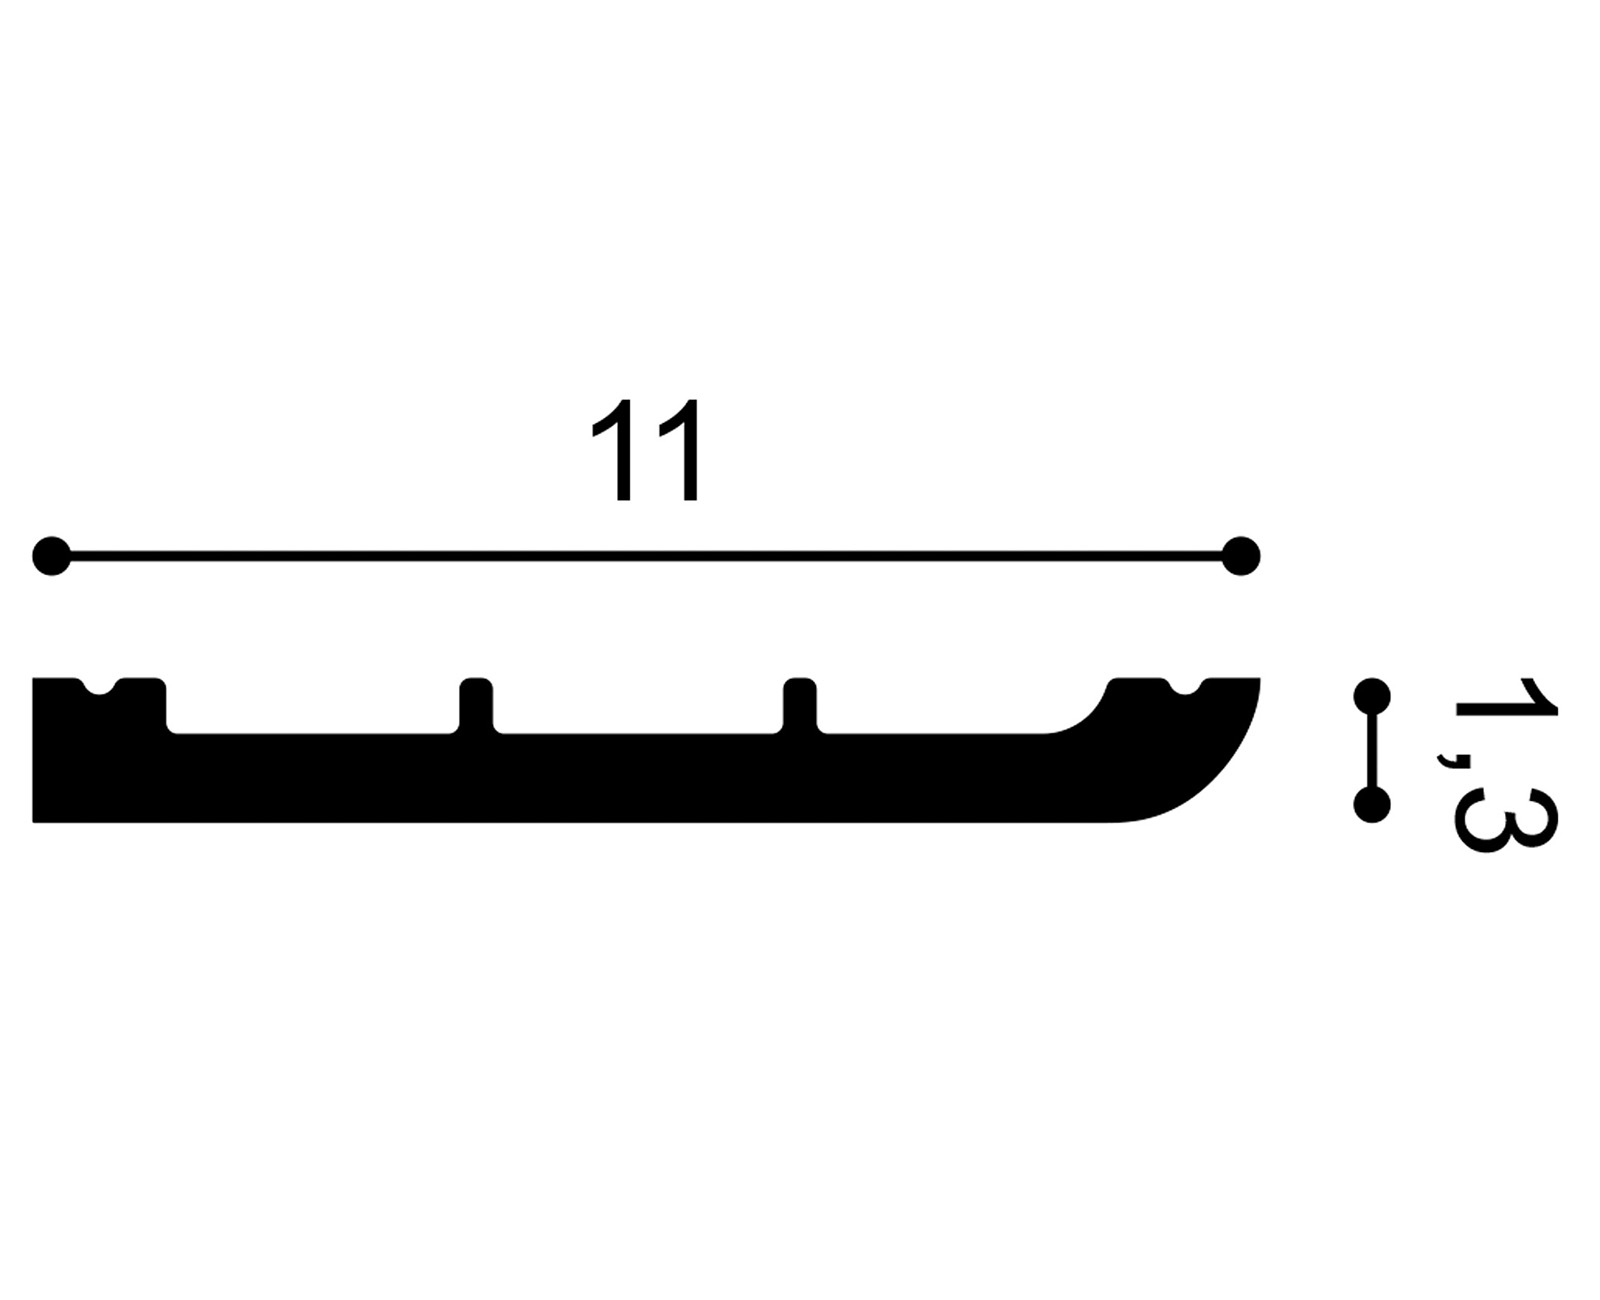             Modern skirting board Bergen - SX184F
        